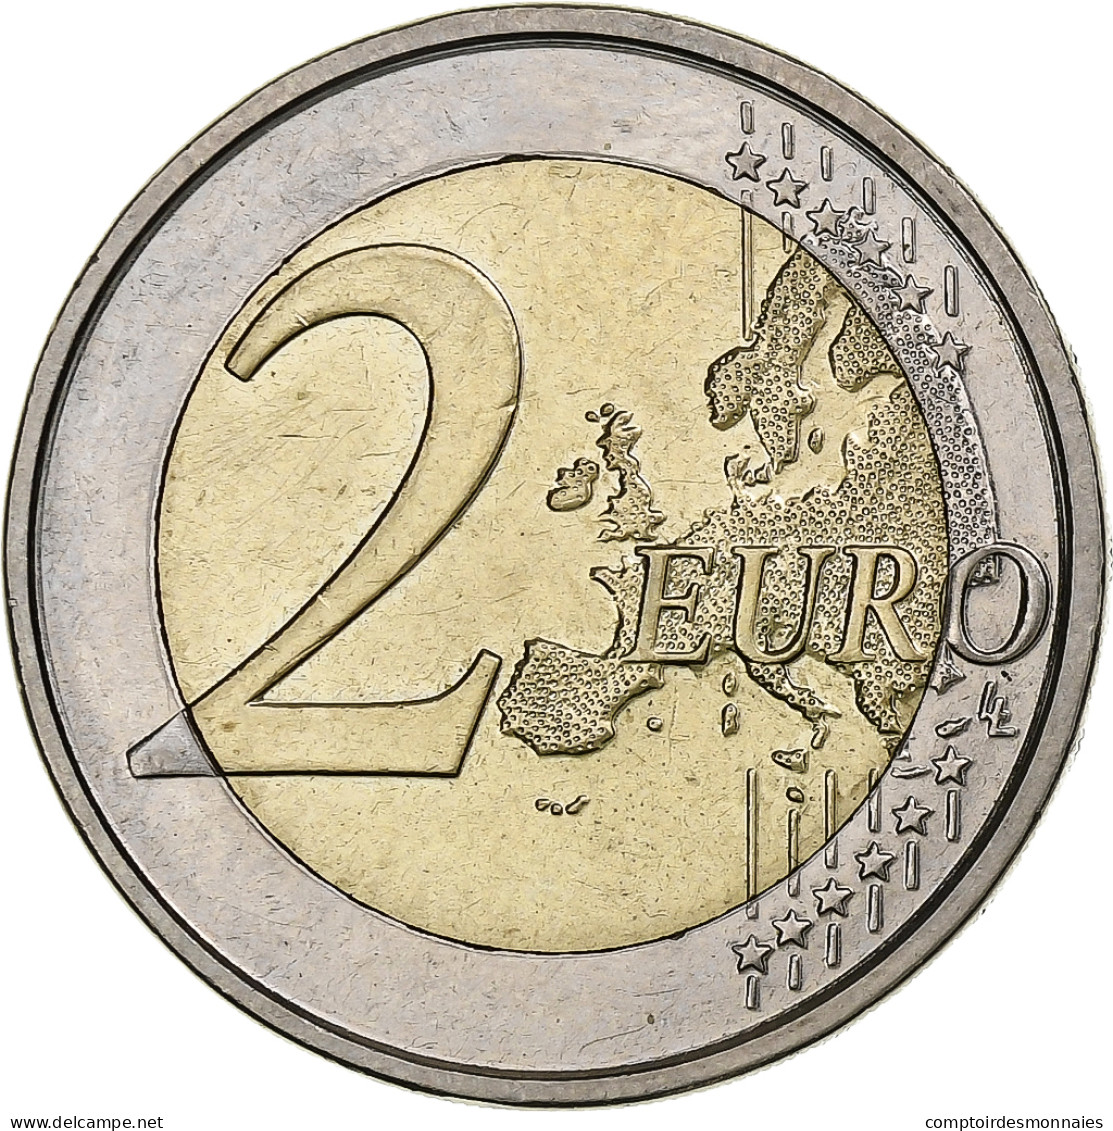 Belgique, Albert II, 2 Euro, 2009, Bruxelles, Bimétallique, SUP, KM:282 - Belgio